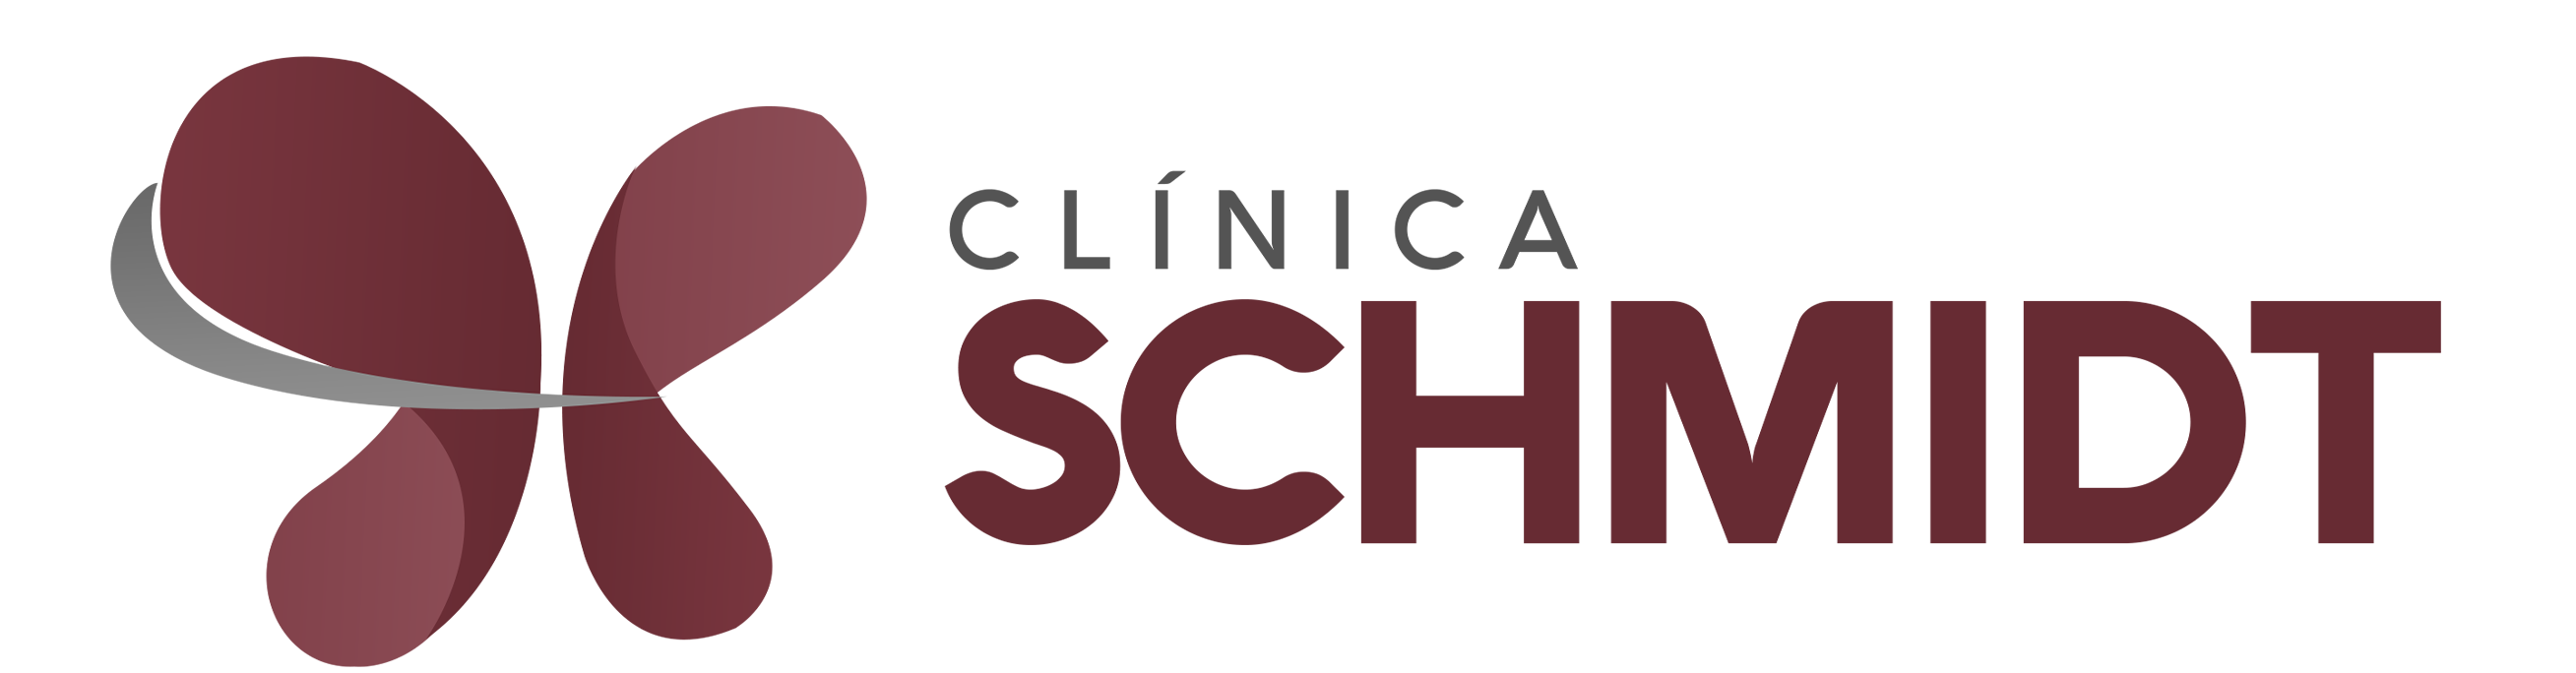 Clínica Schmidt - Pato Branco - PR